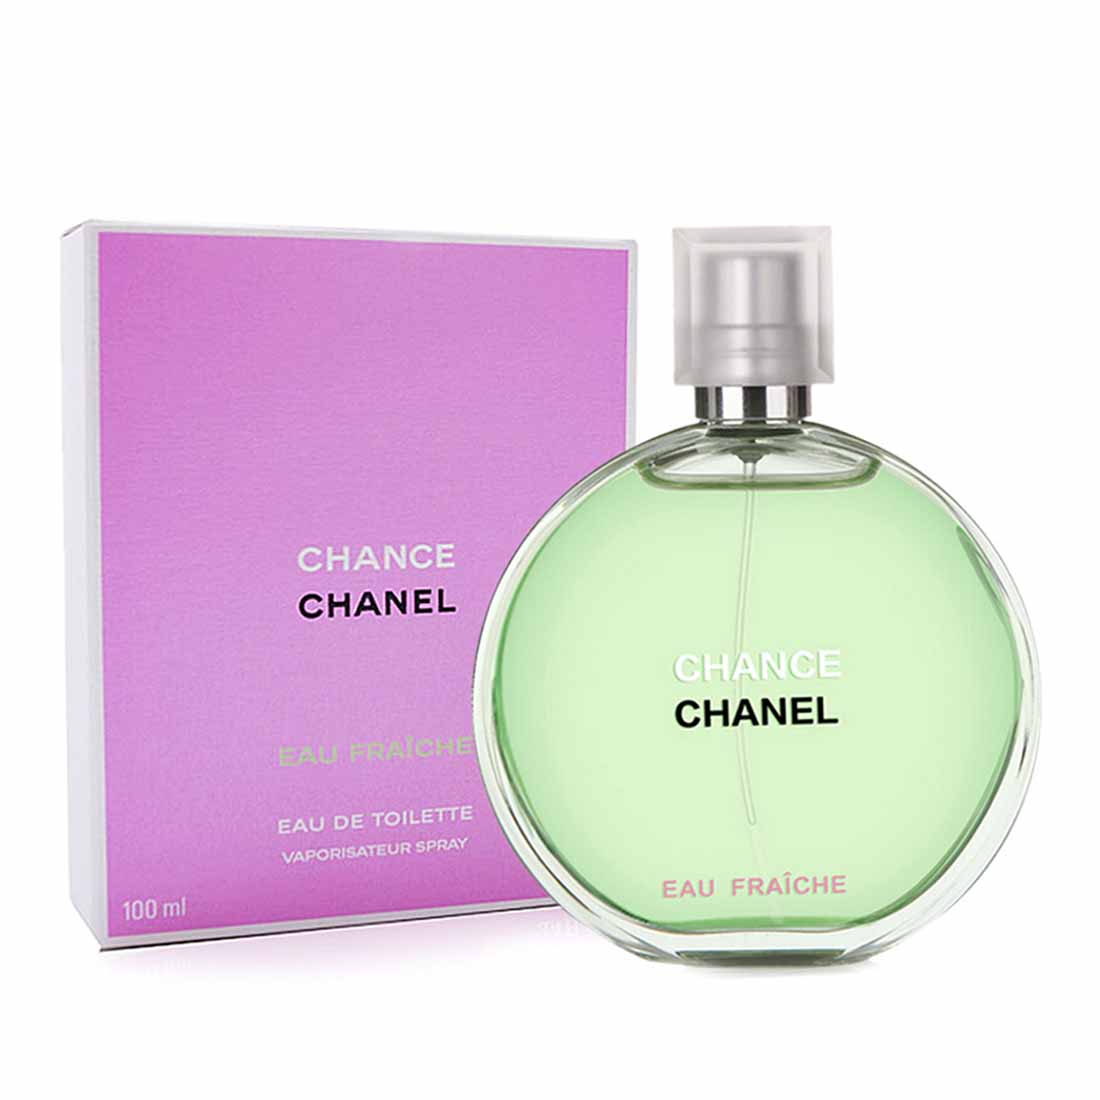 Chanel - Chance Fraiche - Eau De Toilette - 100ml